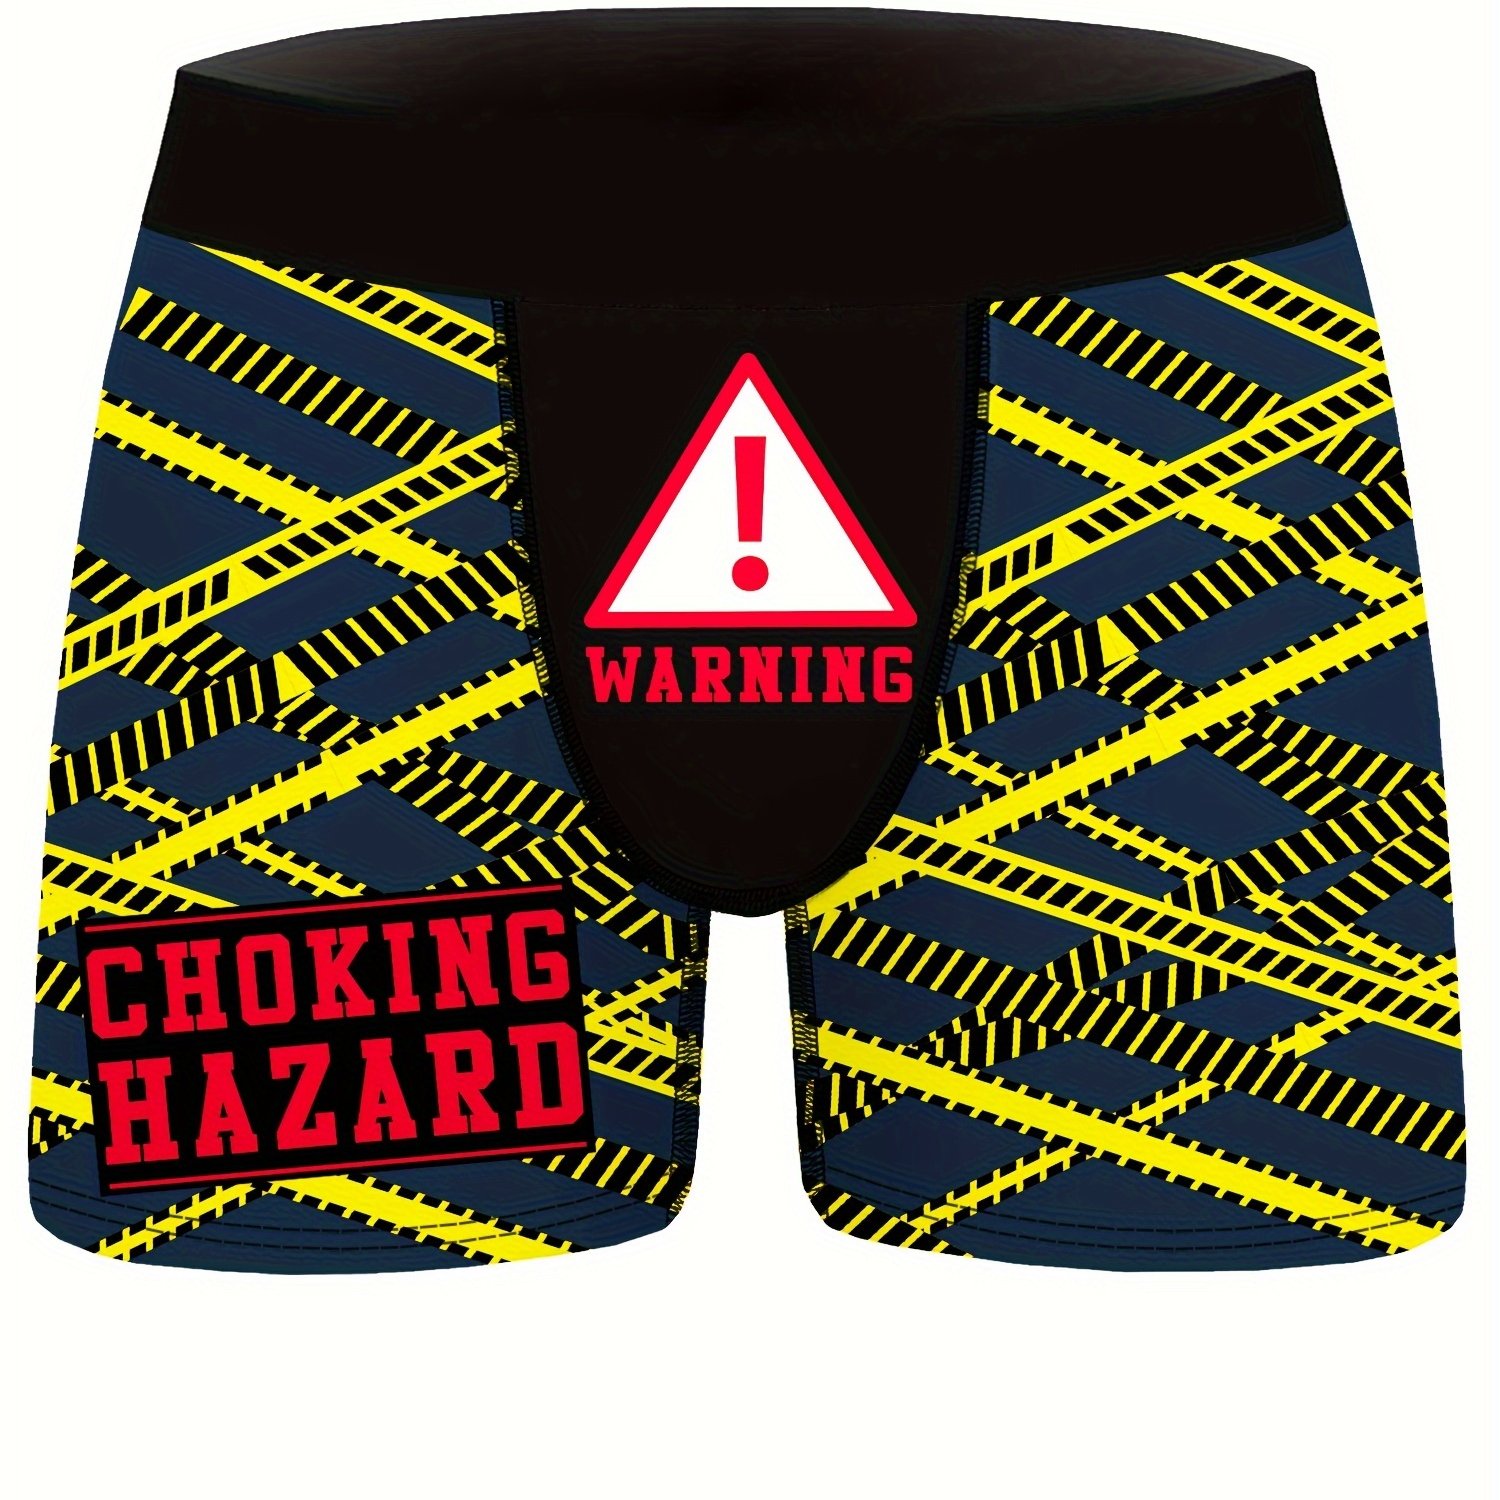 Caution Choking Hazard Boxer Briefs, Funny Boxer Briefs For Men, ONE PAIR  (XL, Black)